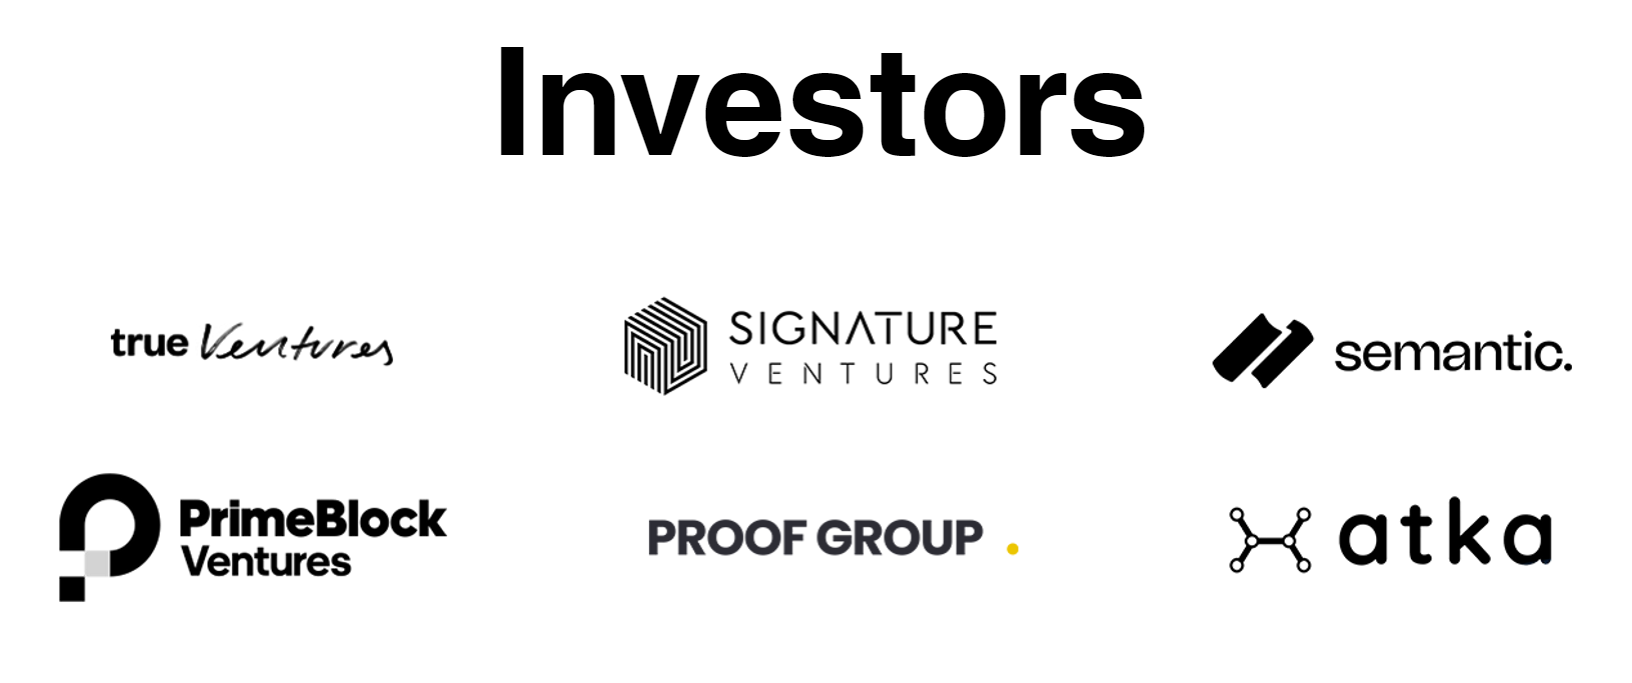 Investors